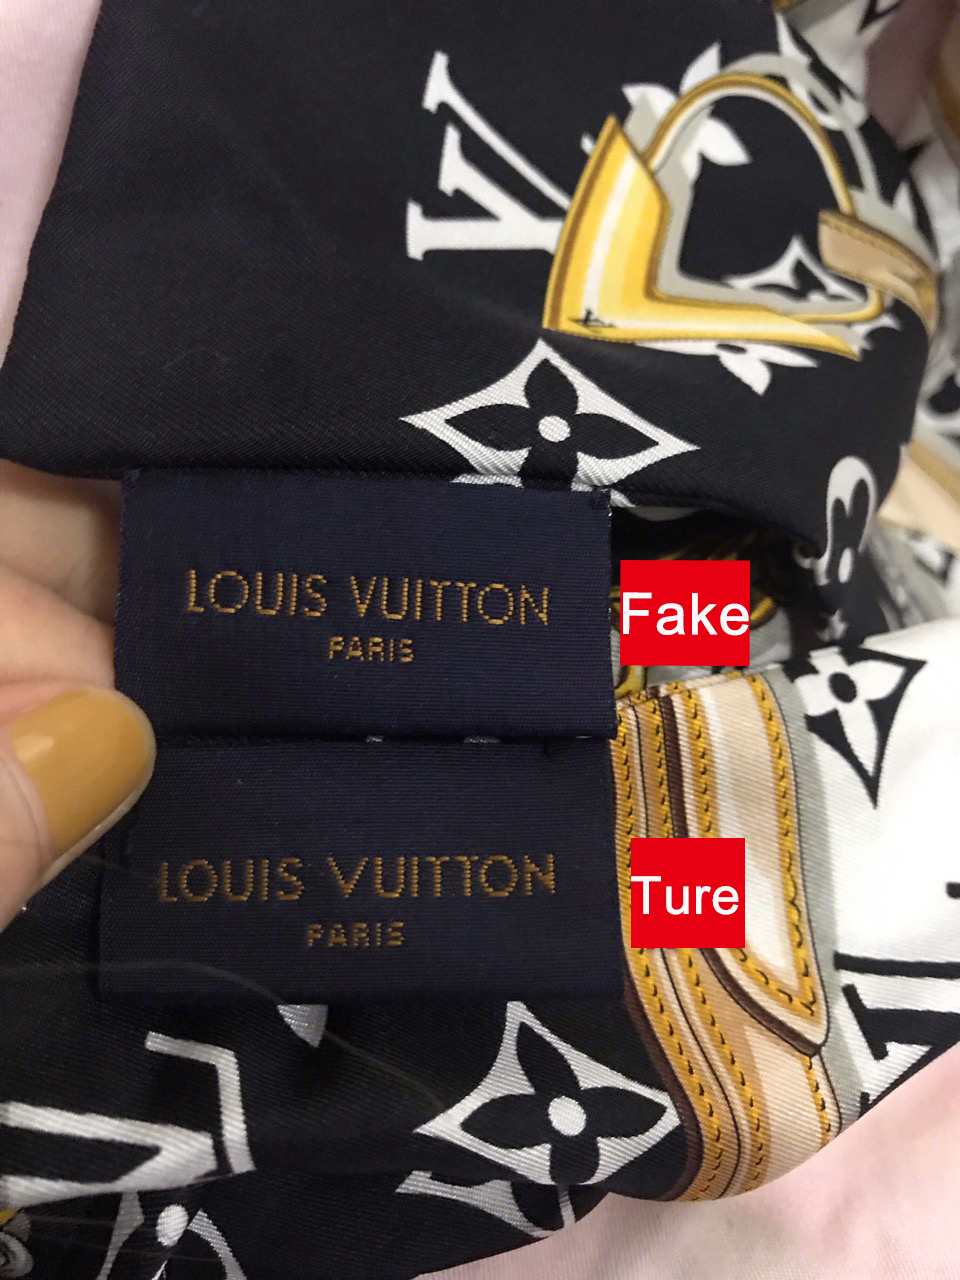 louis vuitton shawl fake vs real